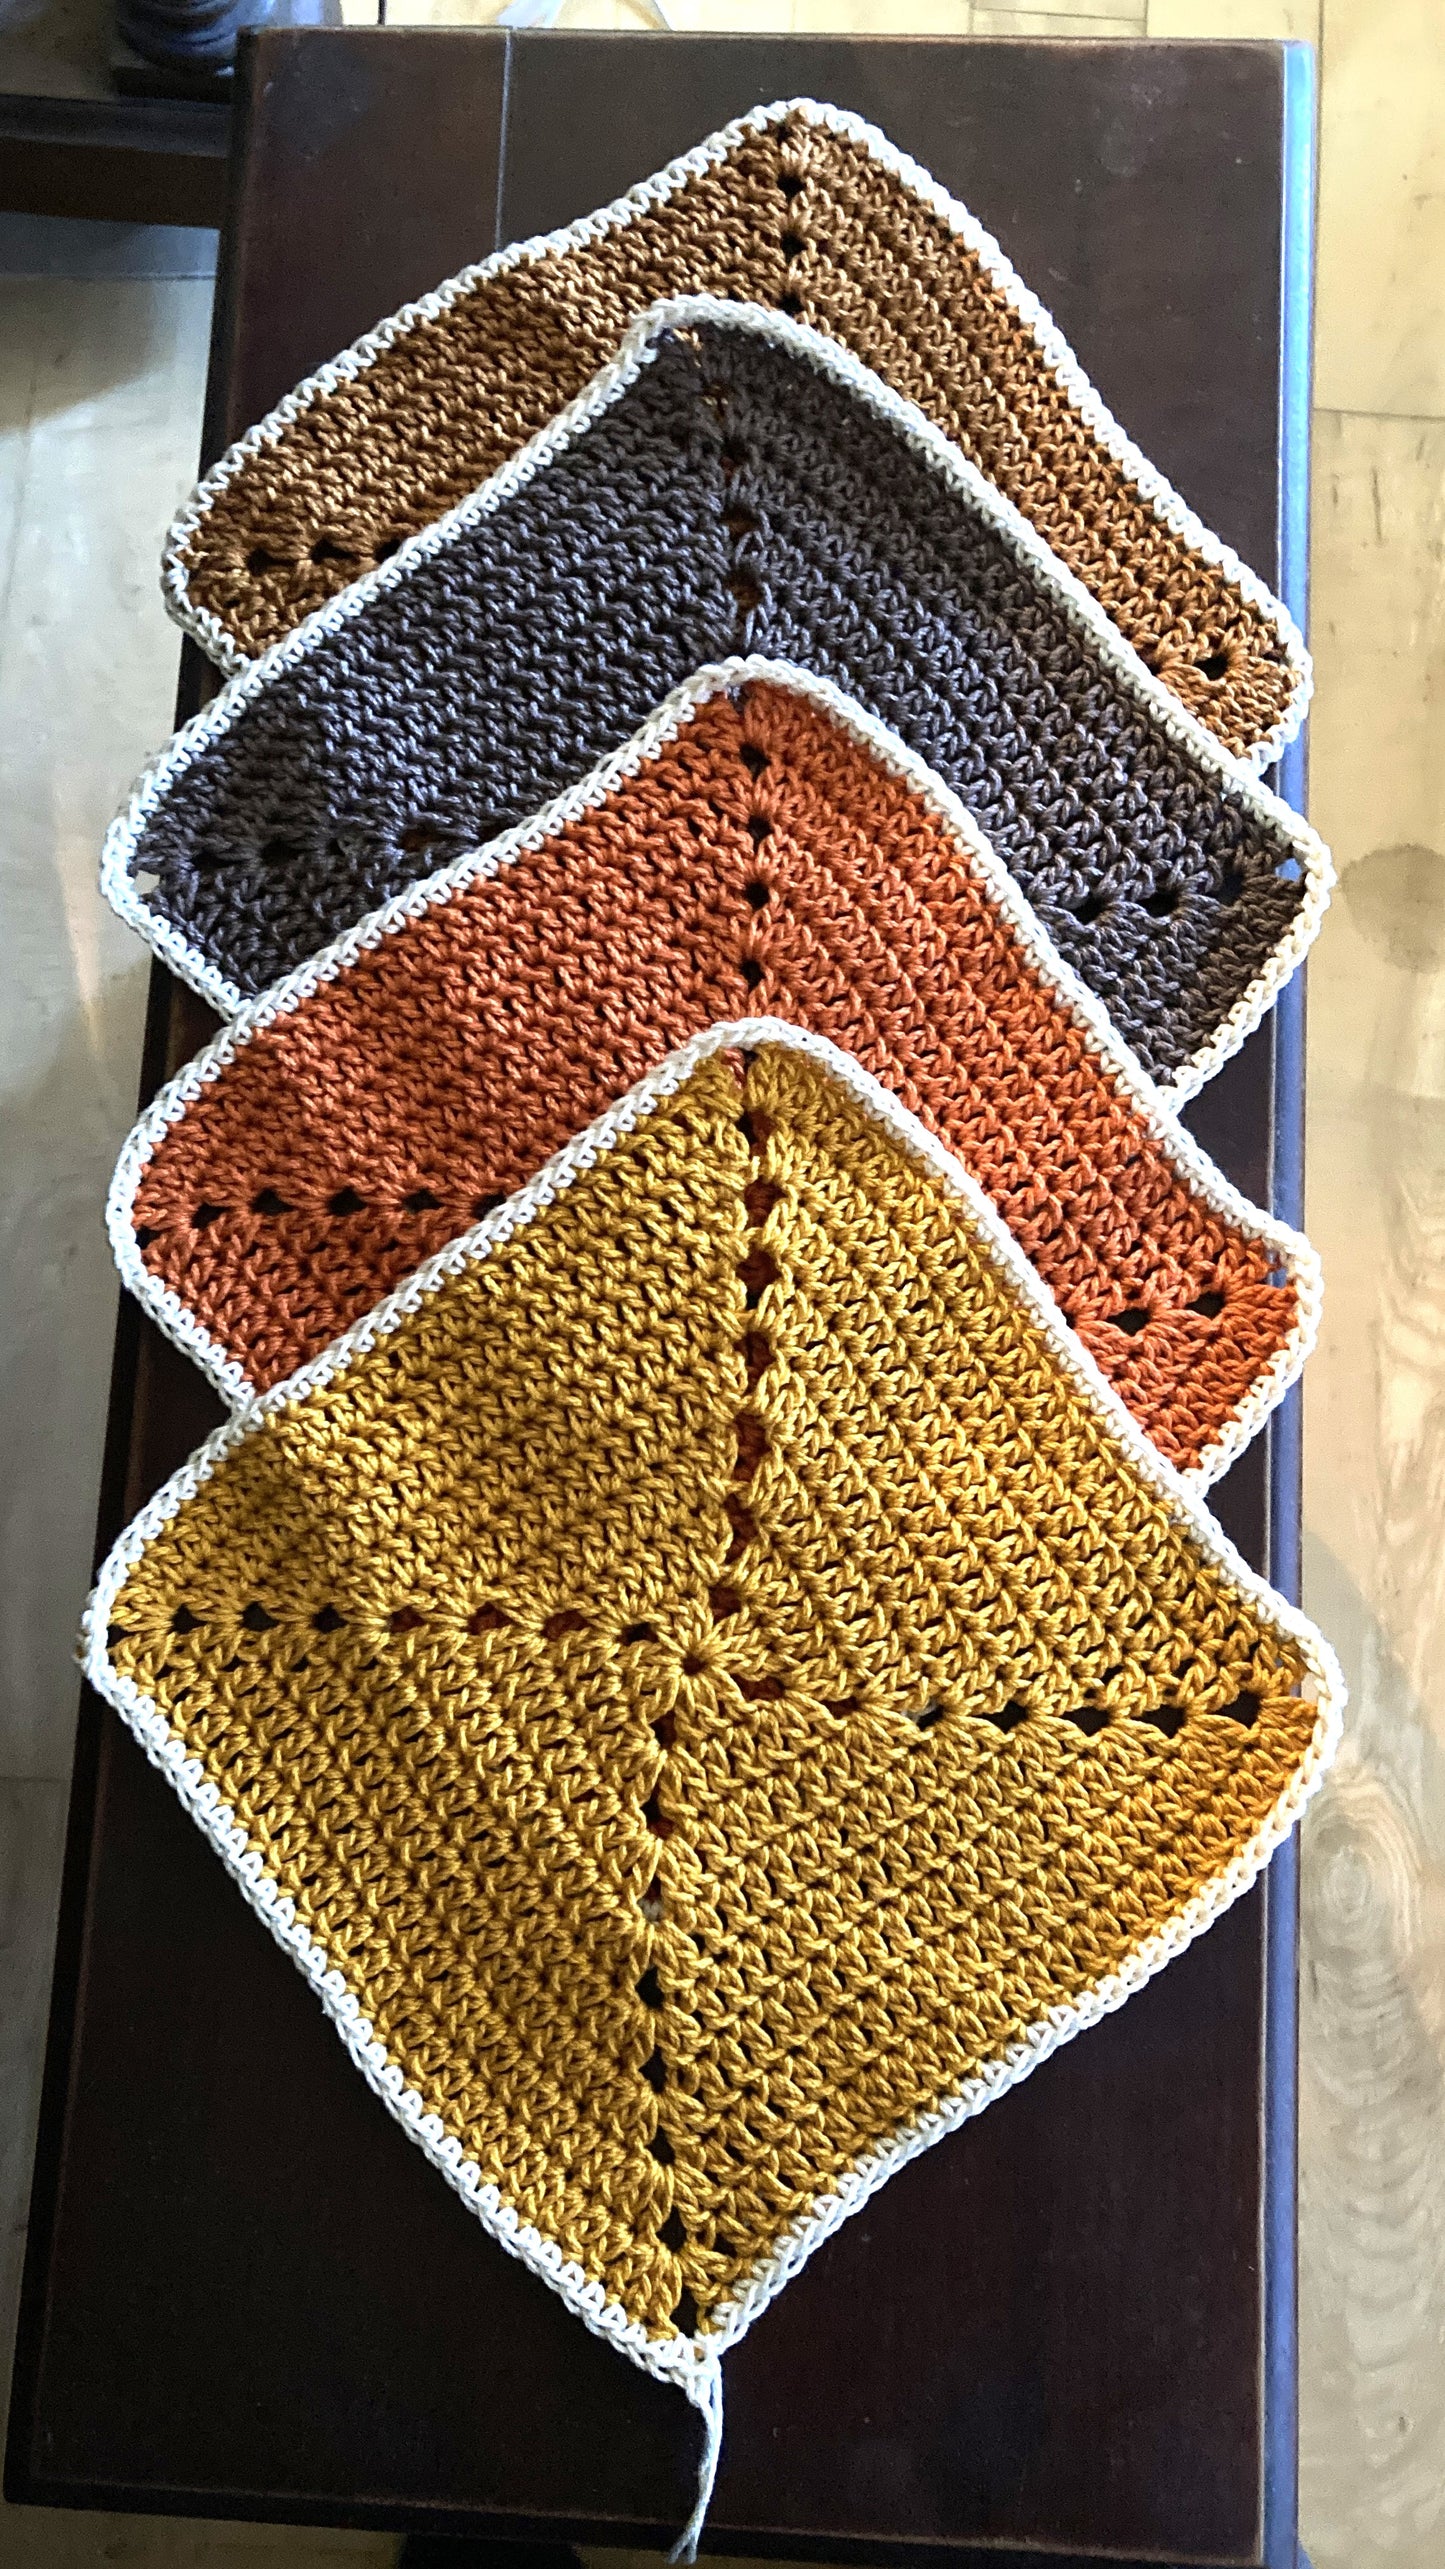 Colorful Button Cowl Crochet Pattern by Victoria Pietz